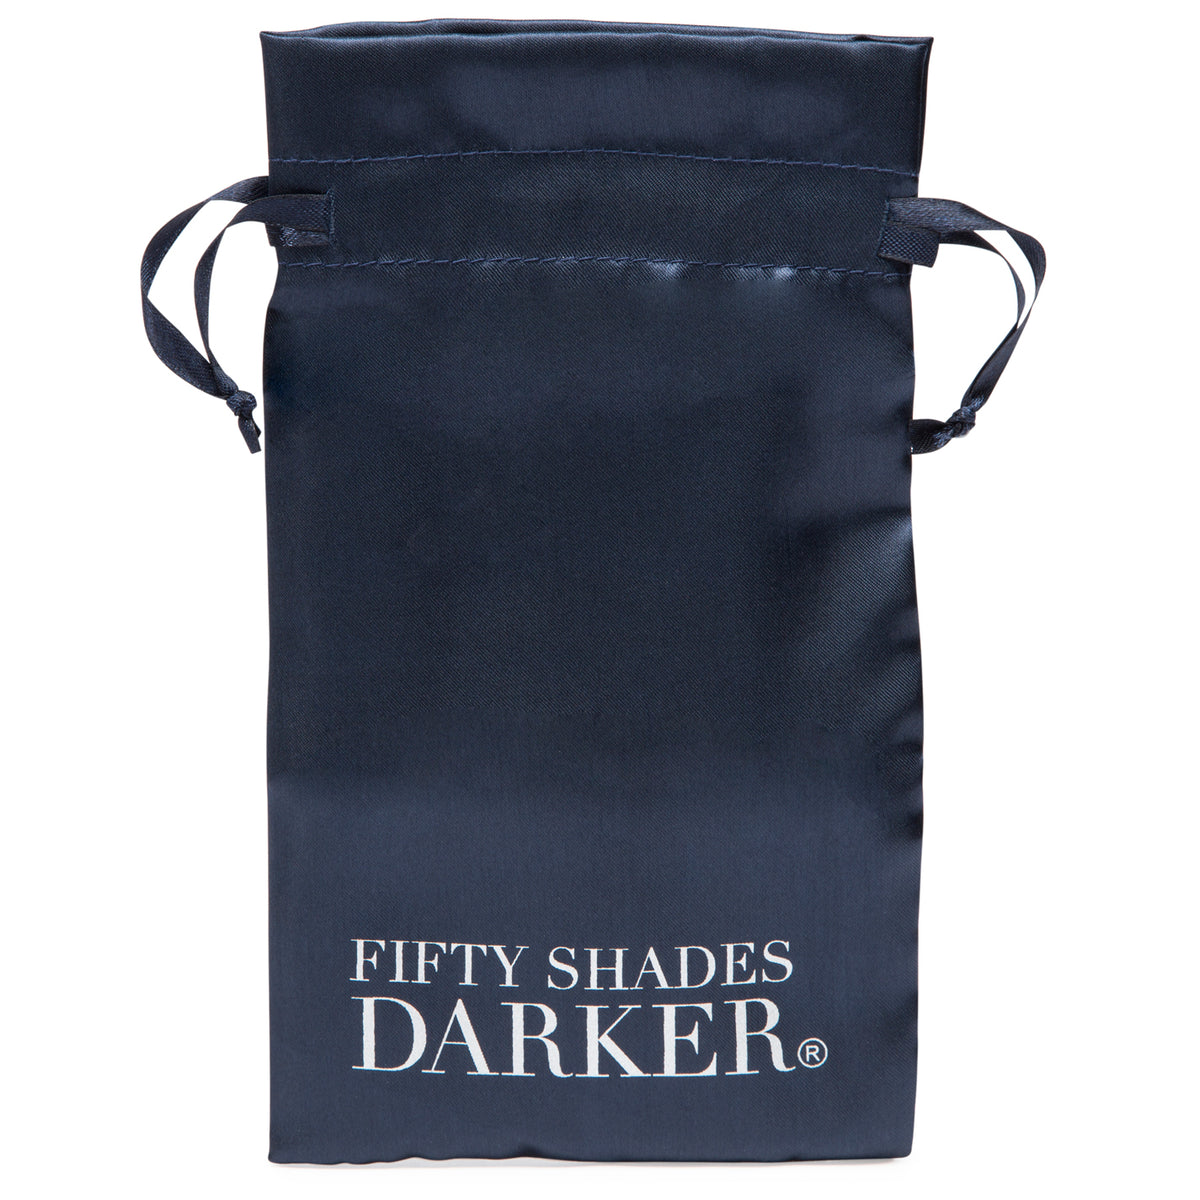 Fifty Shades Darker® Adrenaline Spikes Metal Pinwheel